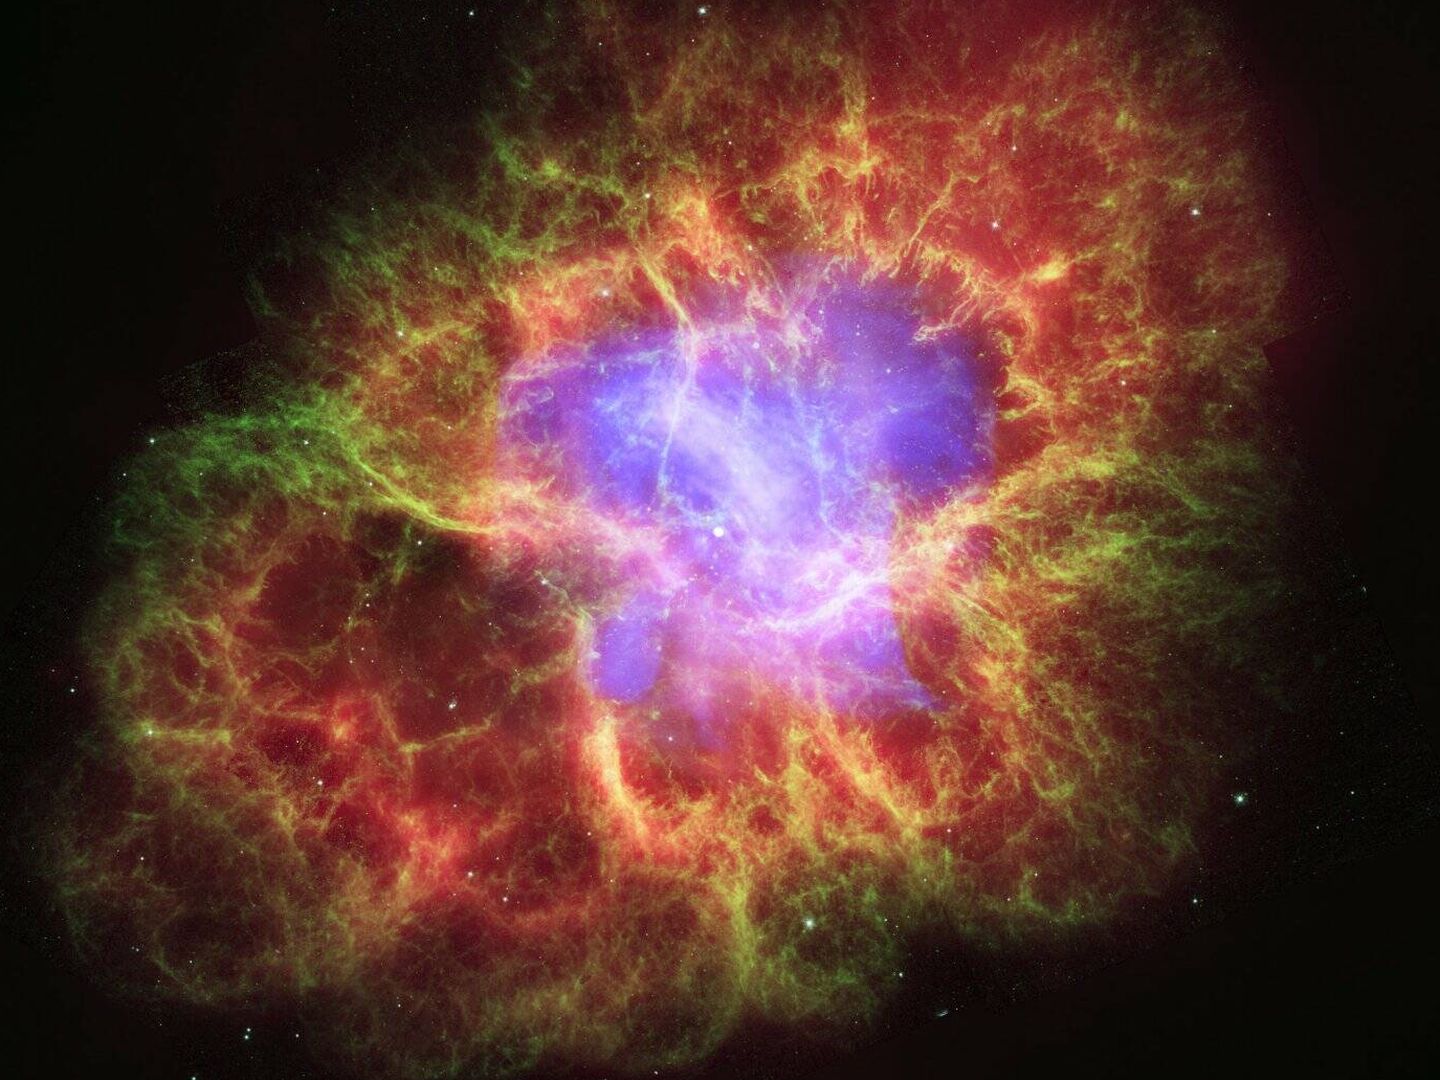 La nebulosa del Cangrejo con su estrella de neutrones giratoria. (NASA - ESA)